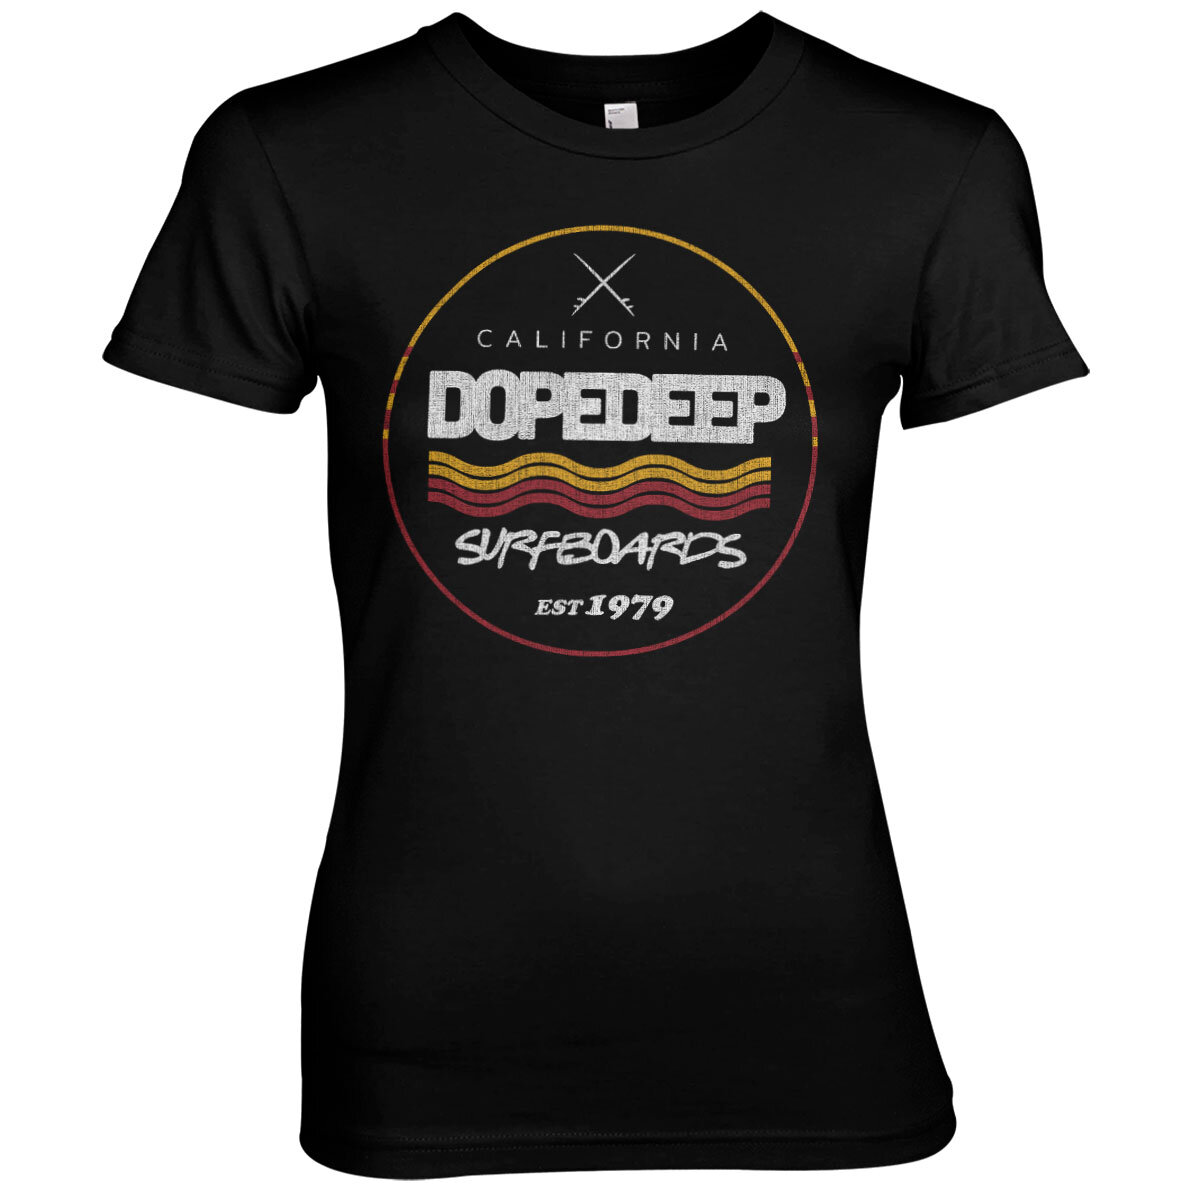 DopeDeep Surfboards Since 1979 Girly Tee